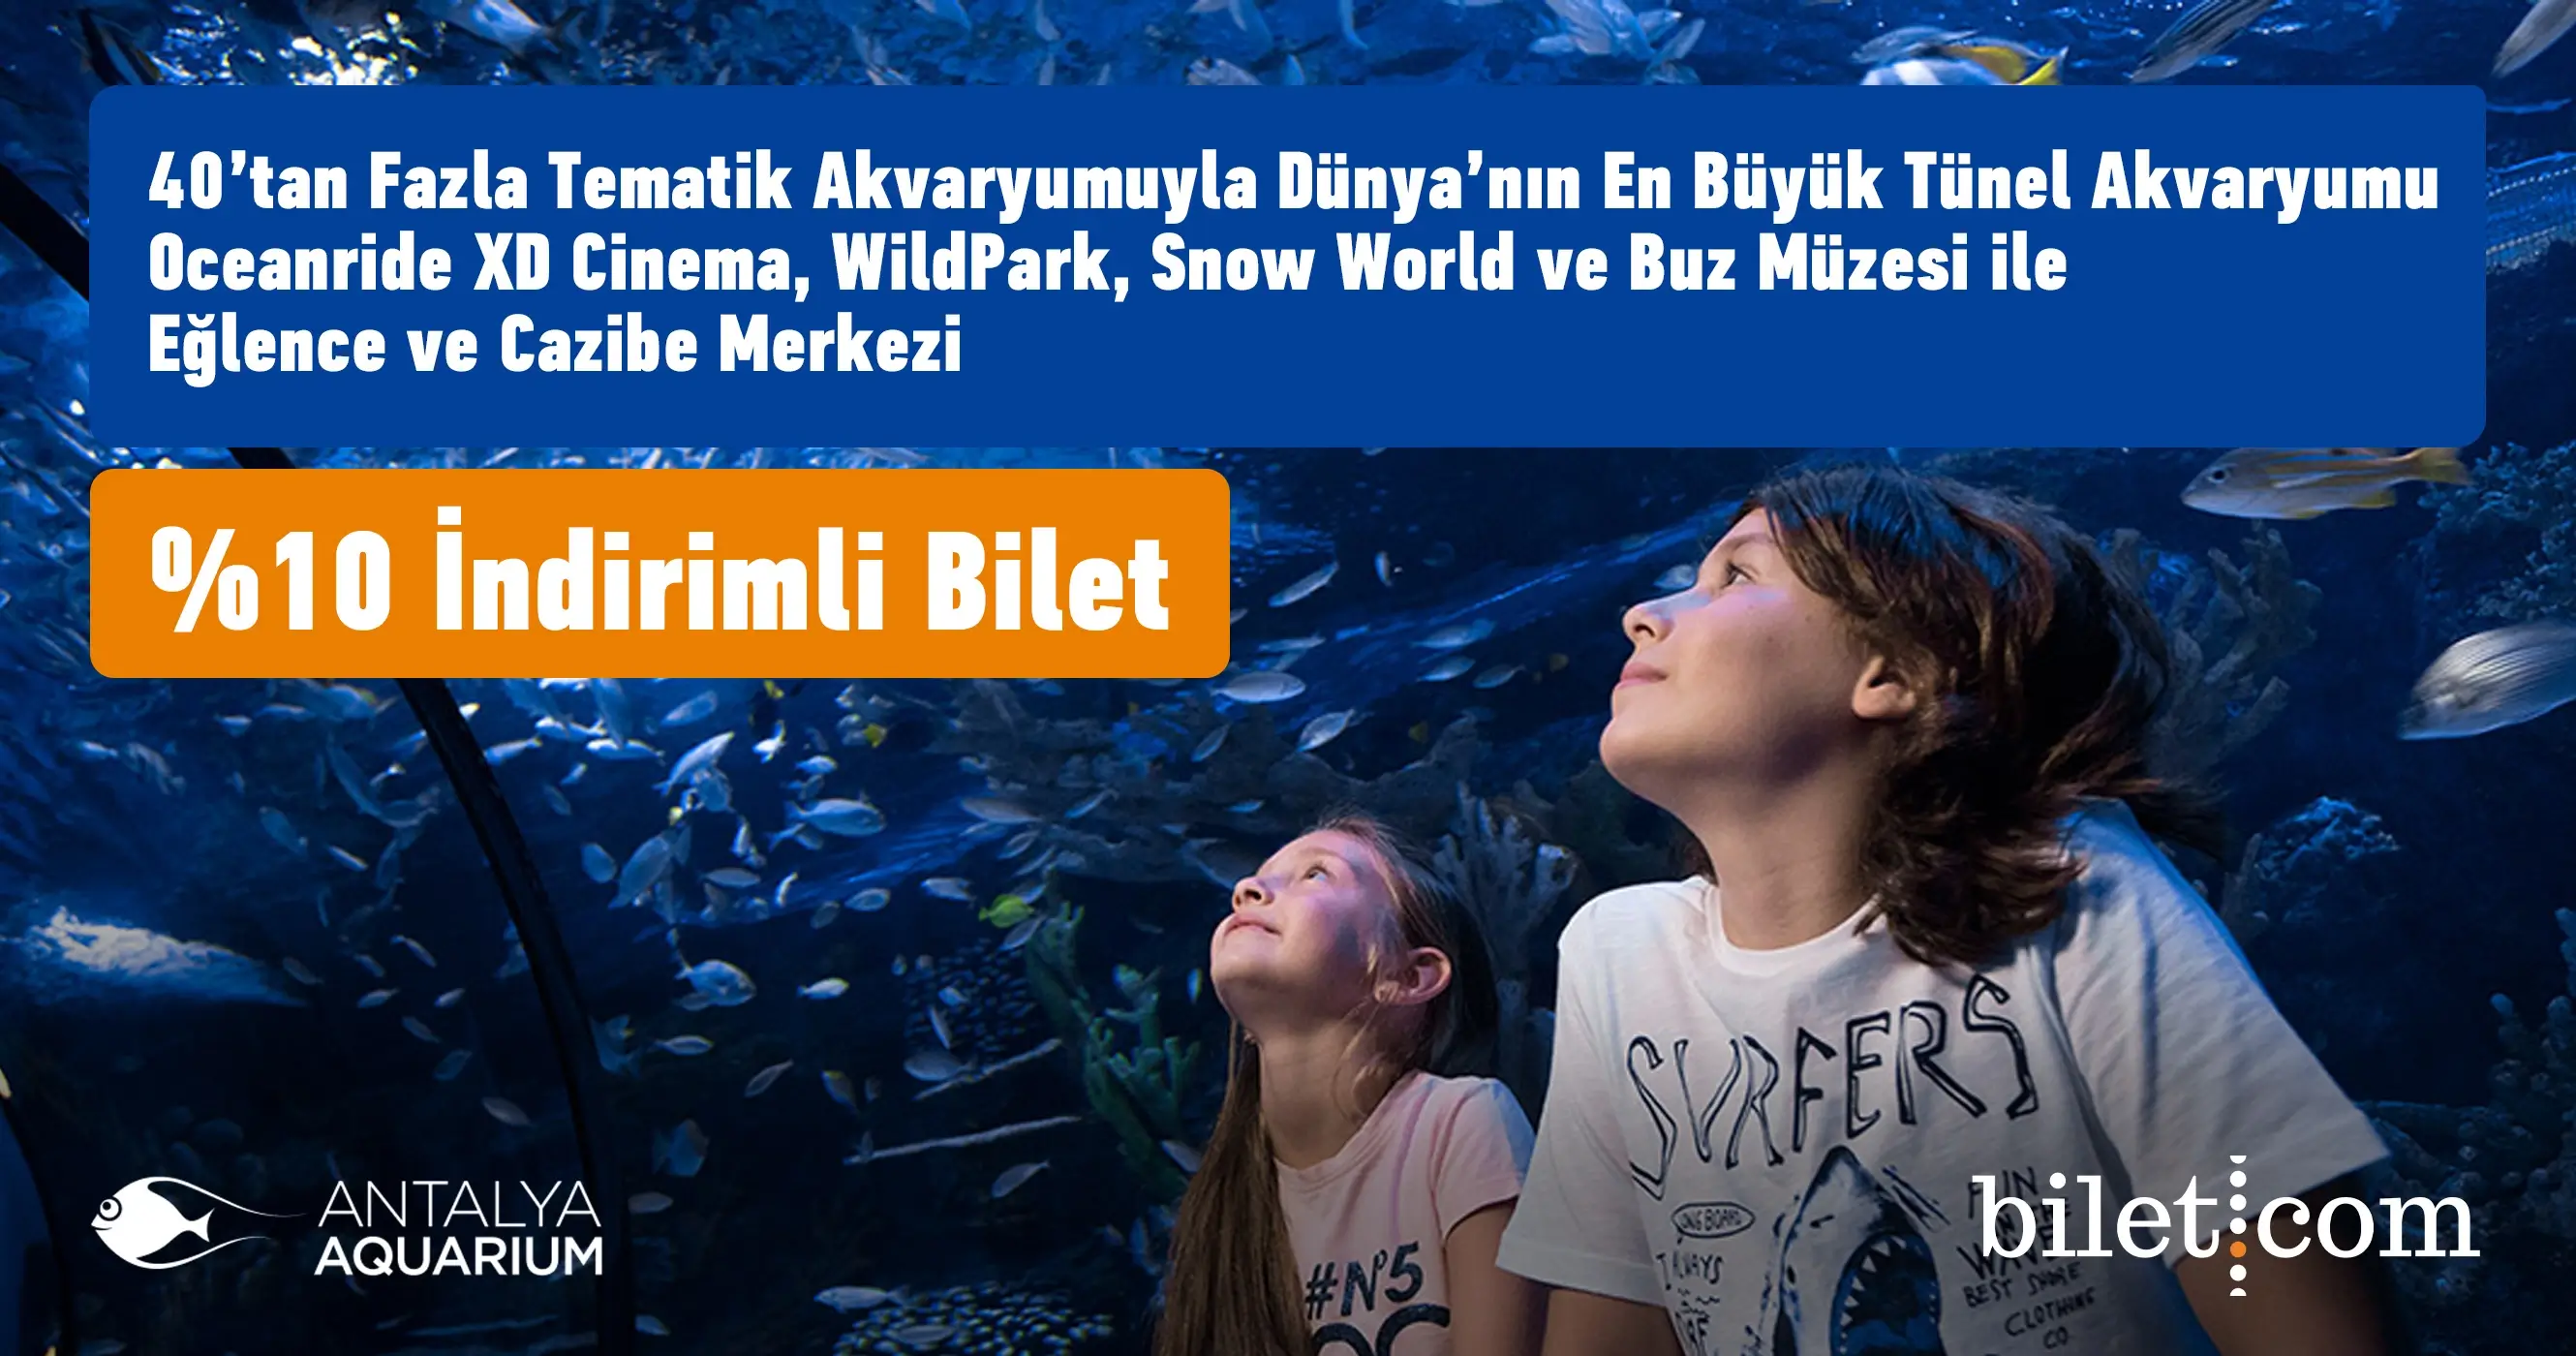 Antalya Aquarium Bileti - 1